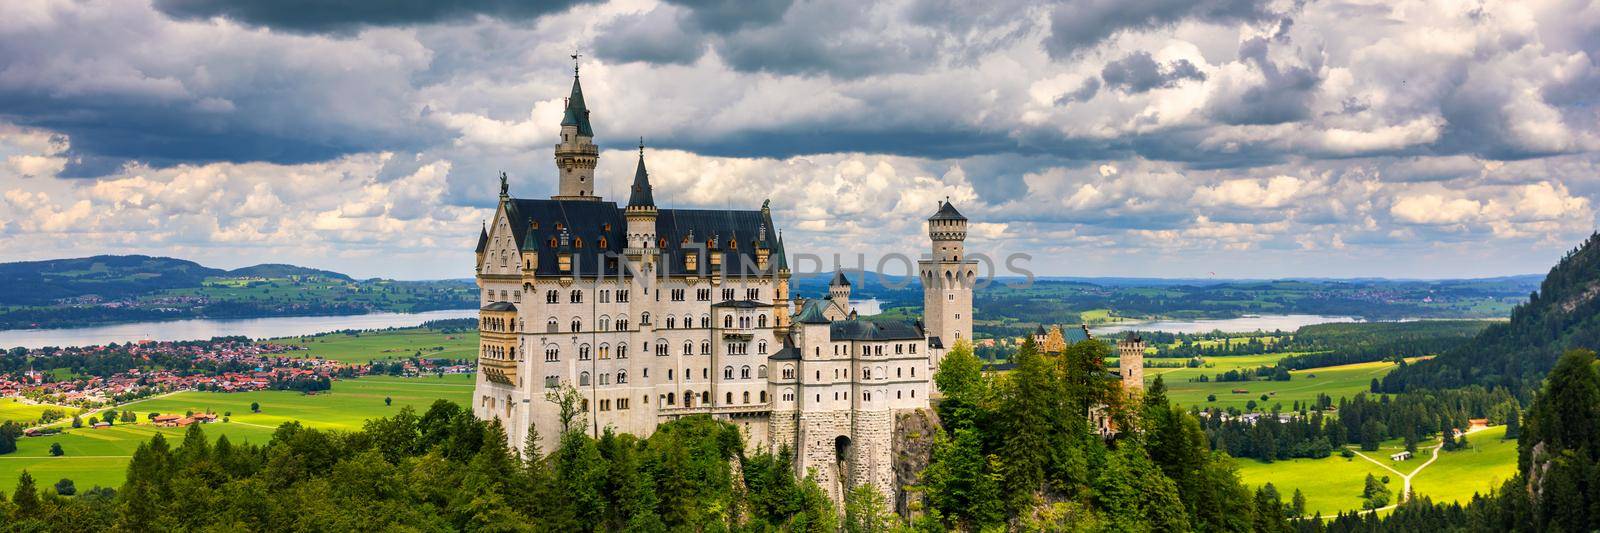 Famous Neuschwanstein Castle with scenic mountain landscape near Fussen, Bavaria, Germany. Neuschwanstein Castle in Hohenschwangau, Germany. 